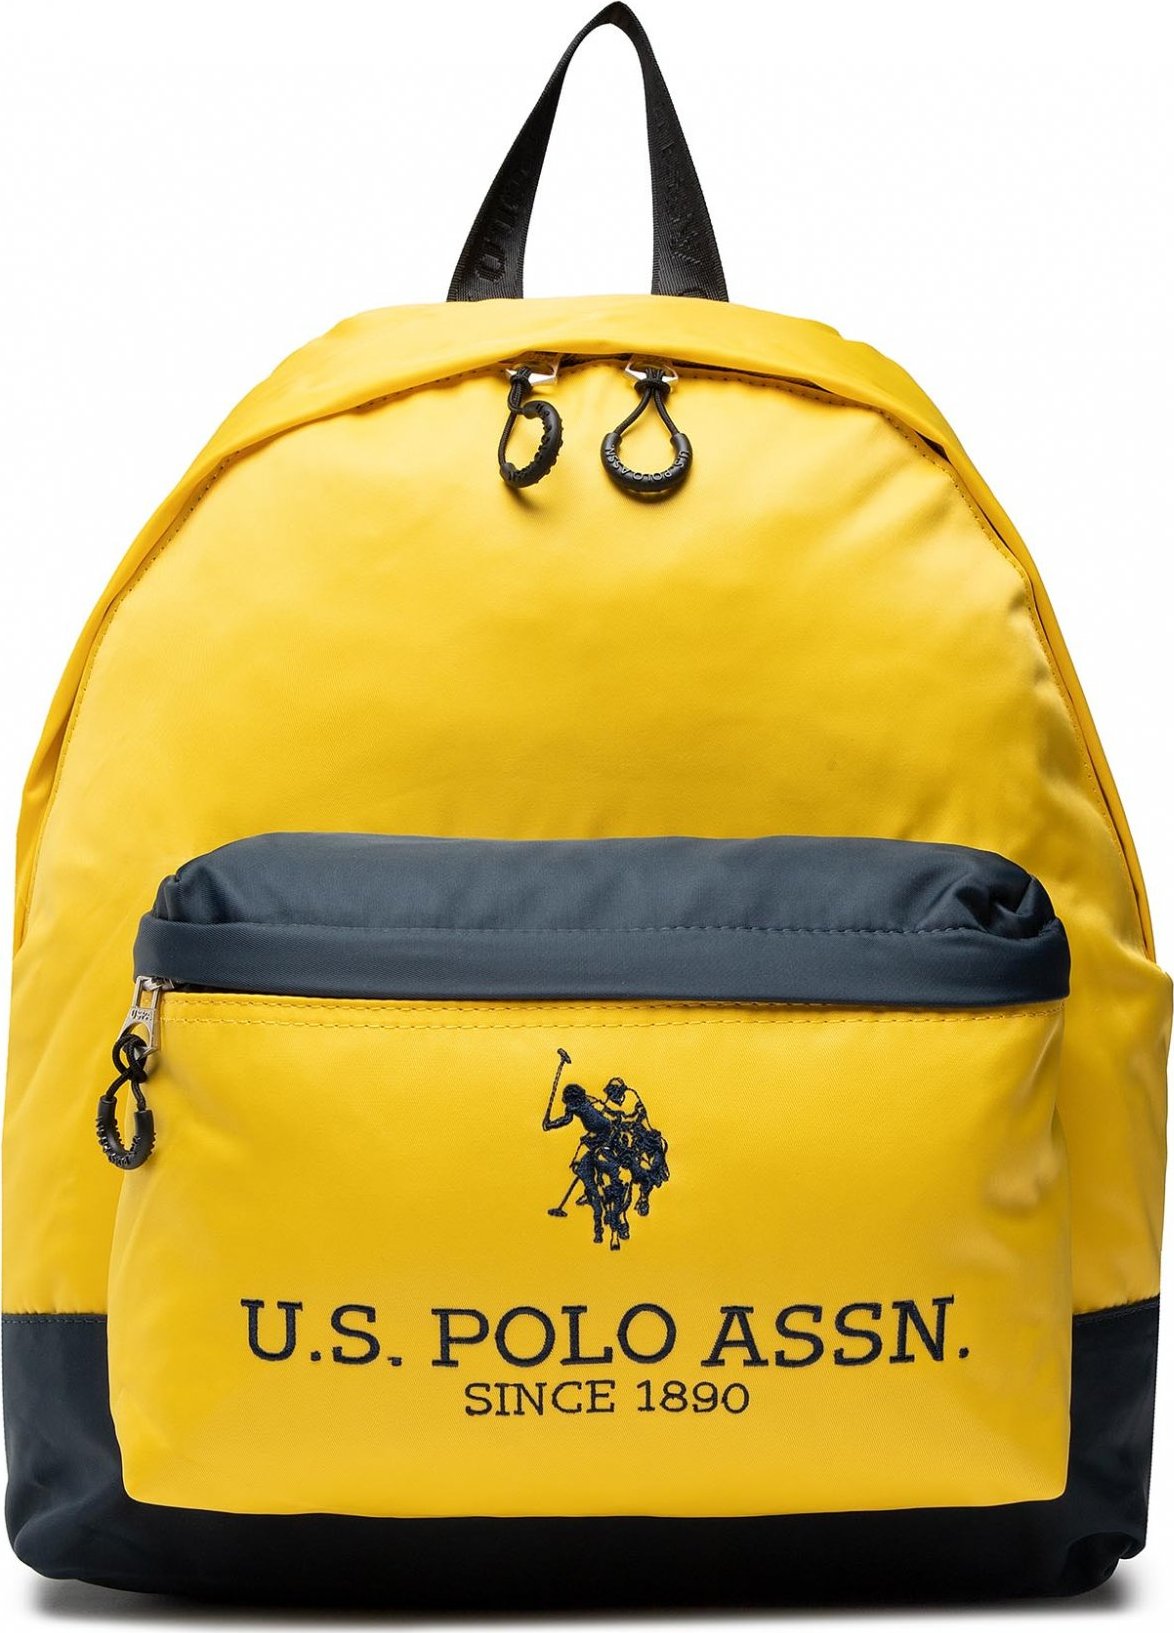 U.S. Polo Assn. New Bump Backpack Bag BIUNB4855MIA220